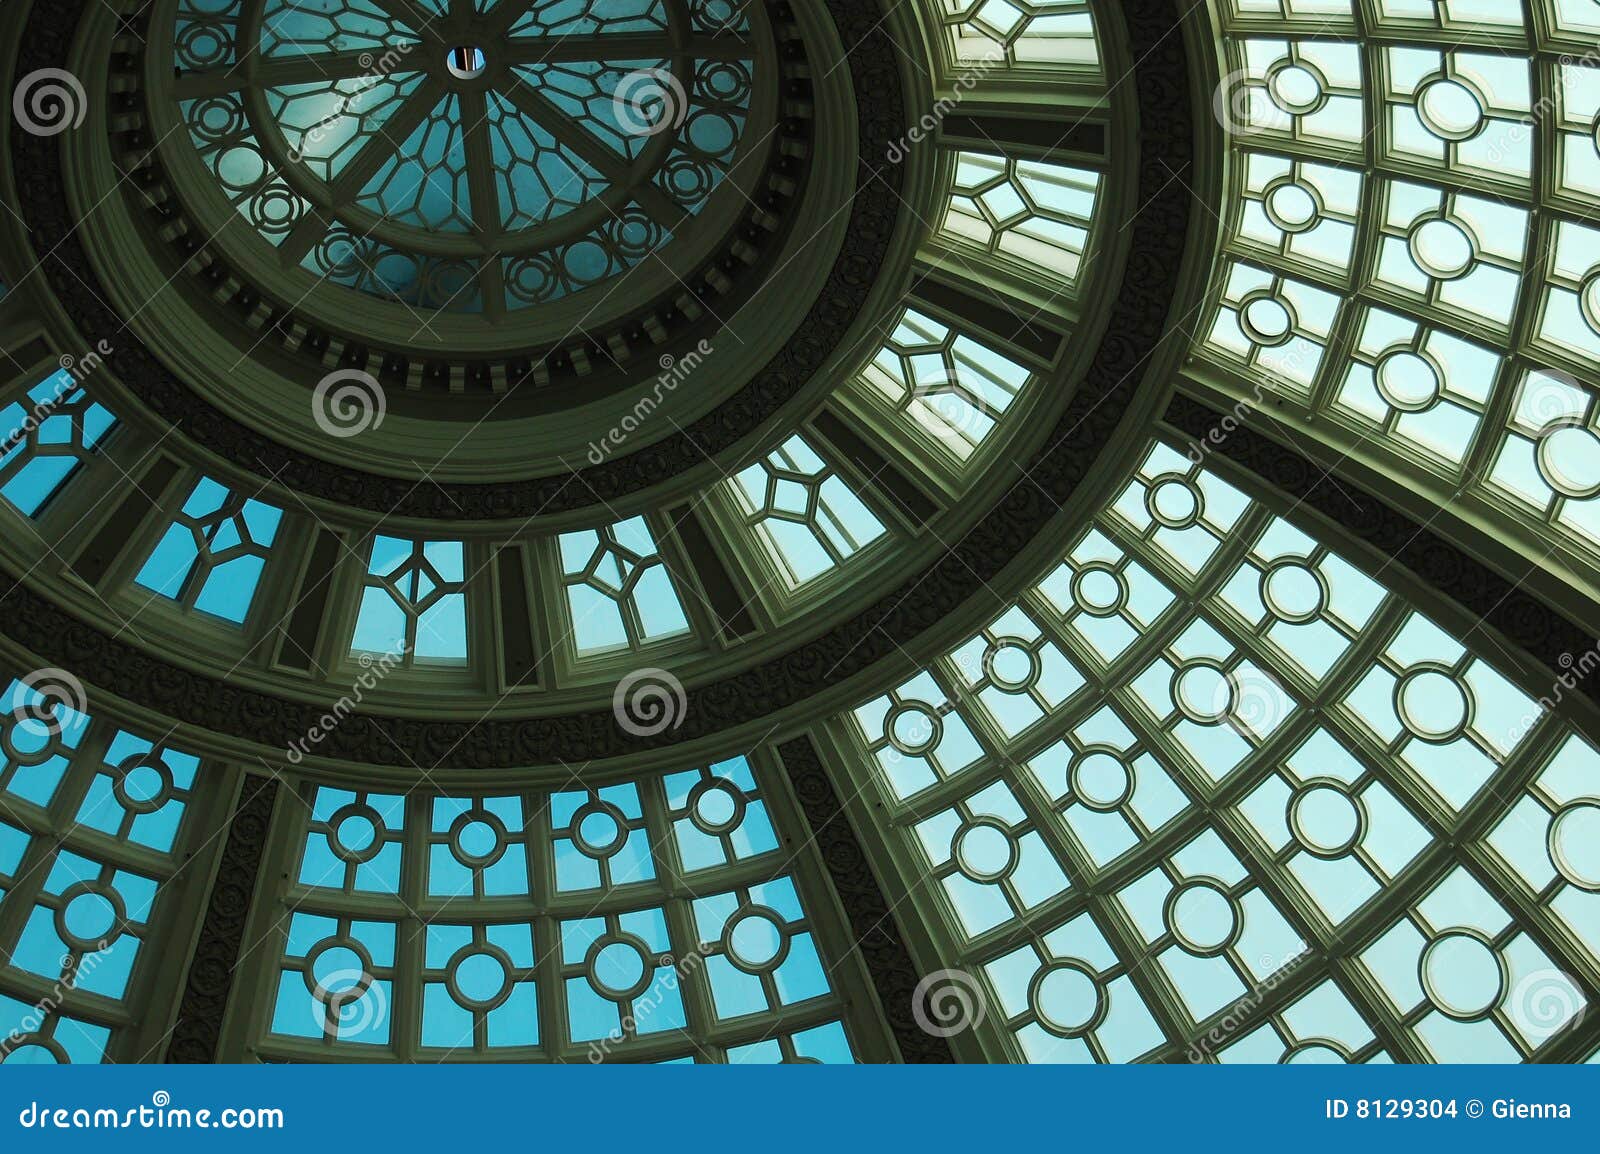 blue skylight dome